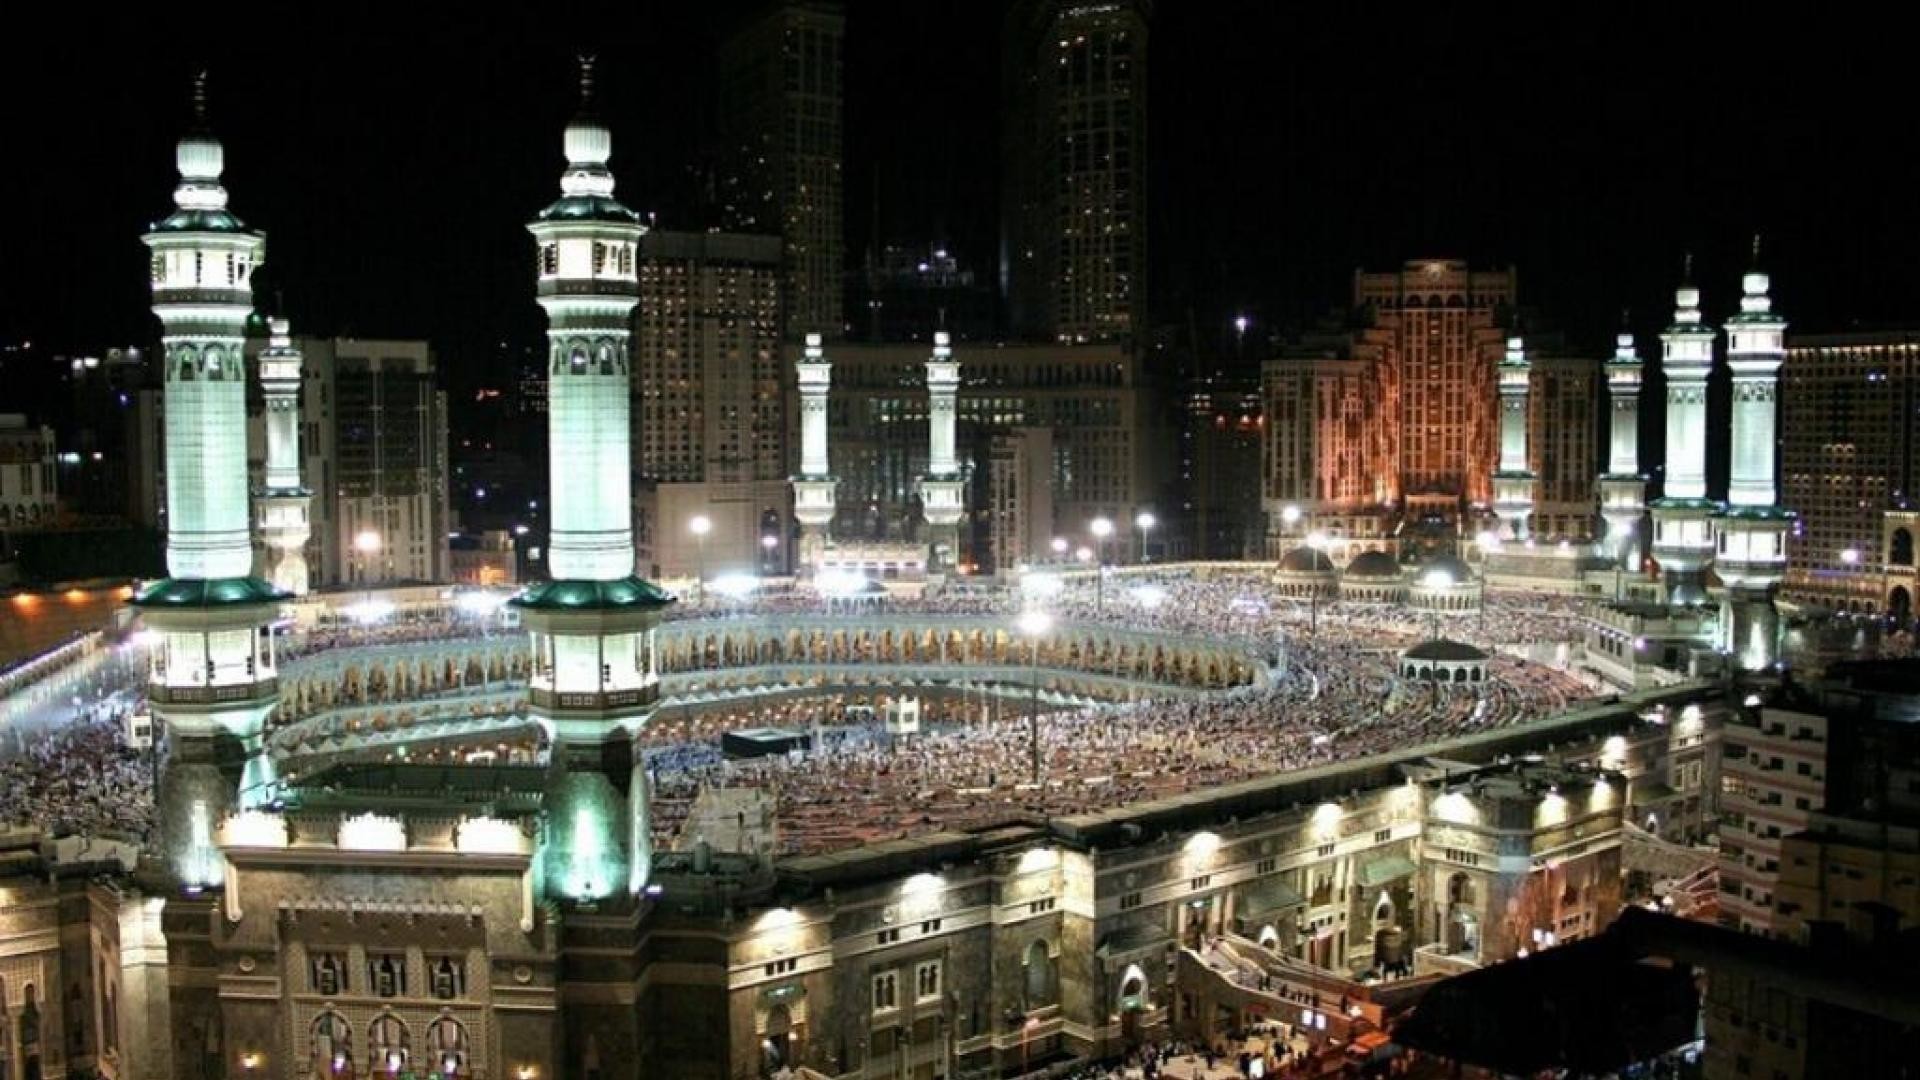 Mecca HD Wallpaper (70+ images)